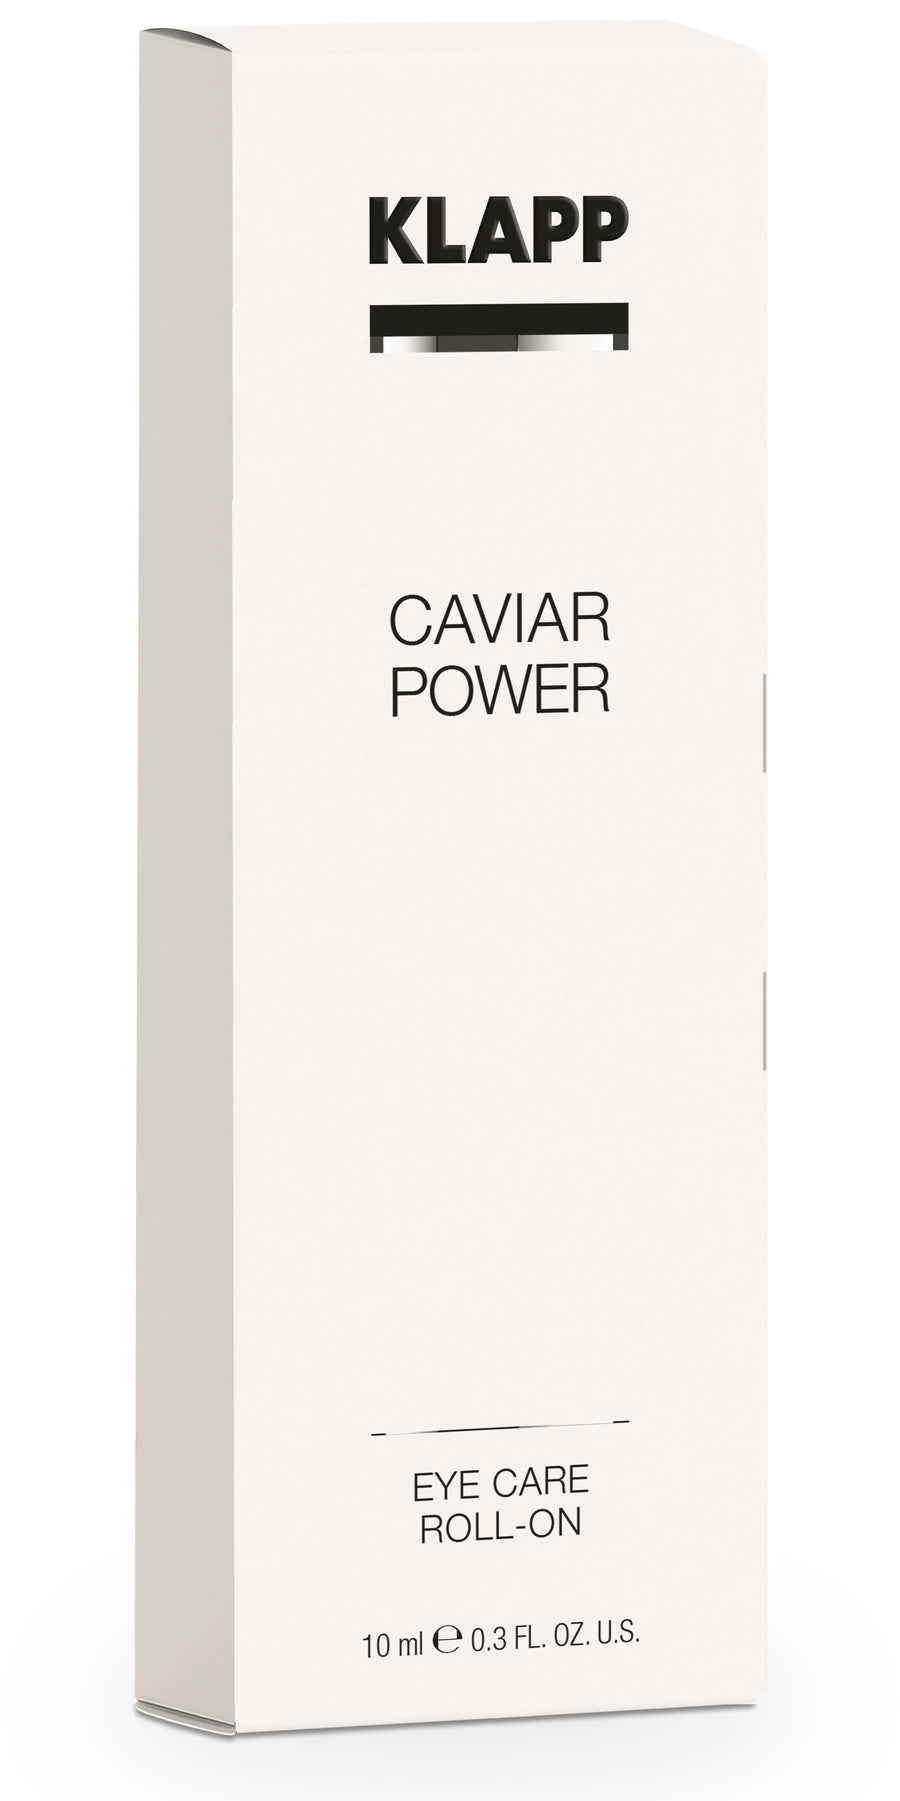 Caviar power Eye care fluid 10ml, Art.no. 2522, nega okoli oči, spredaj